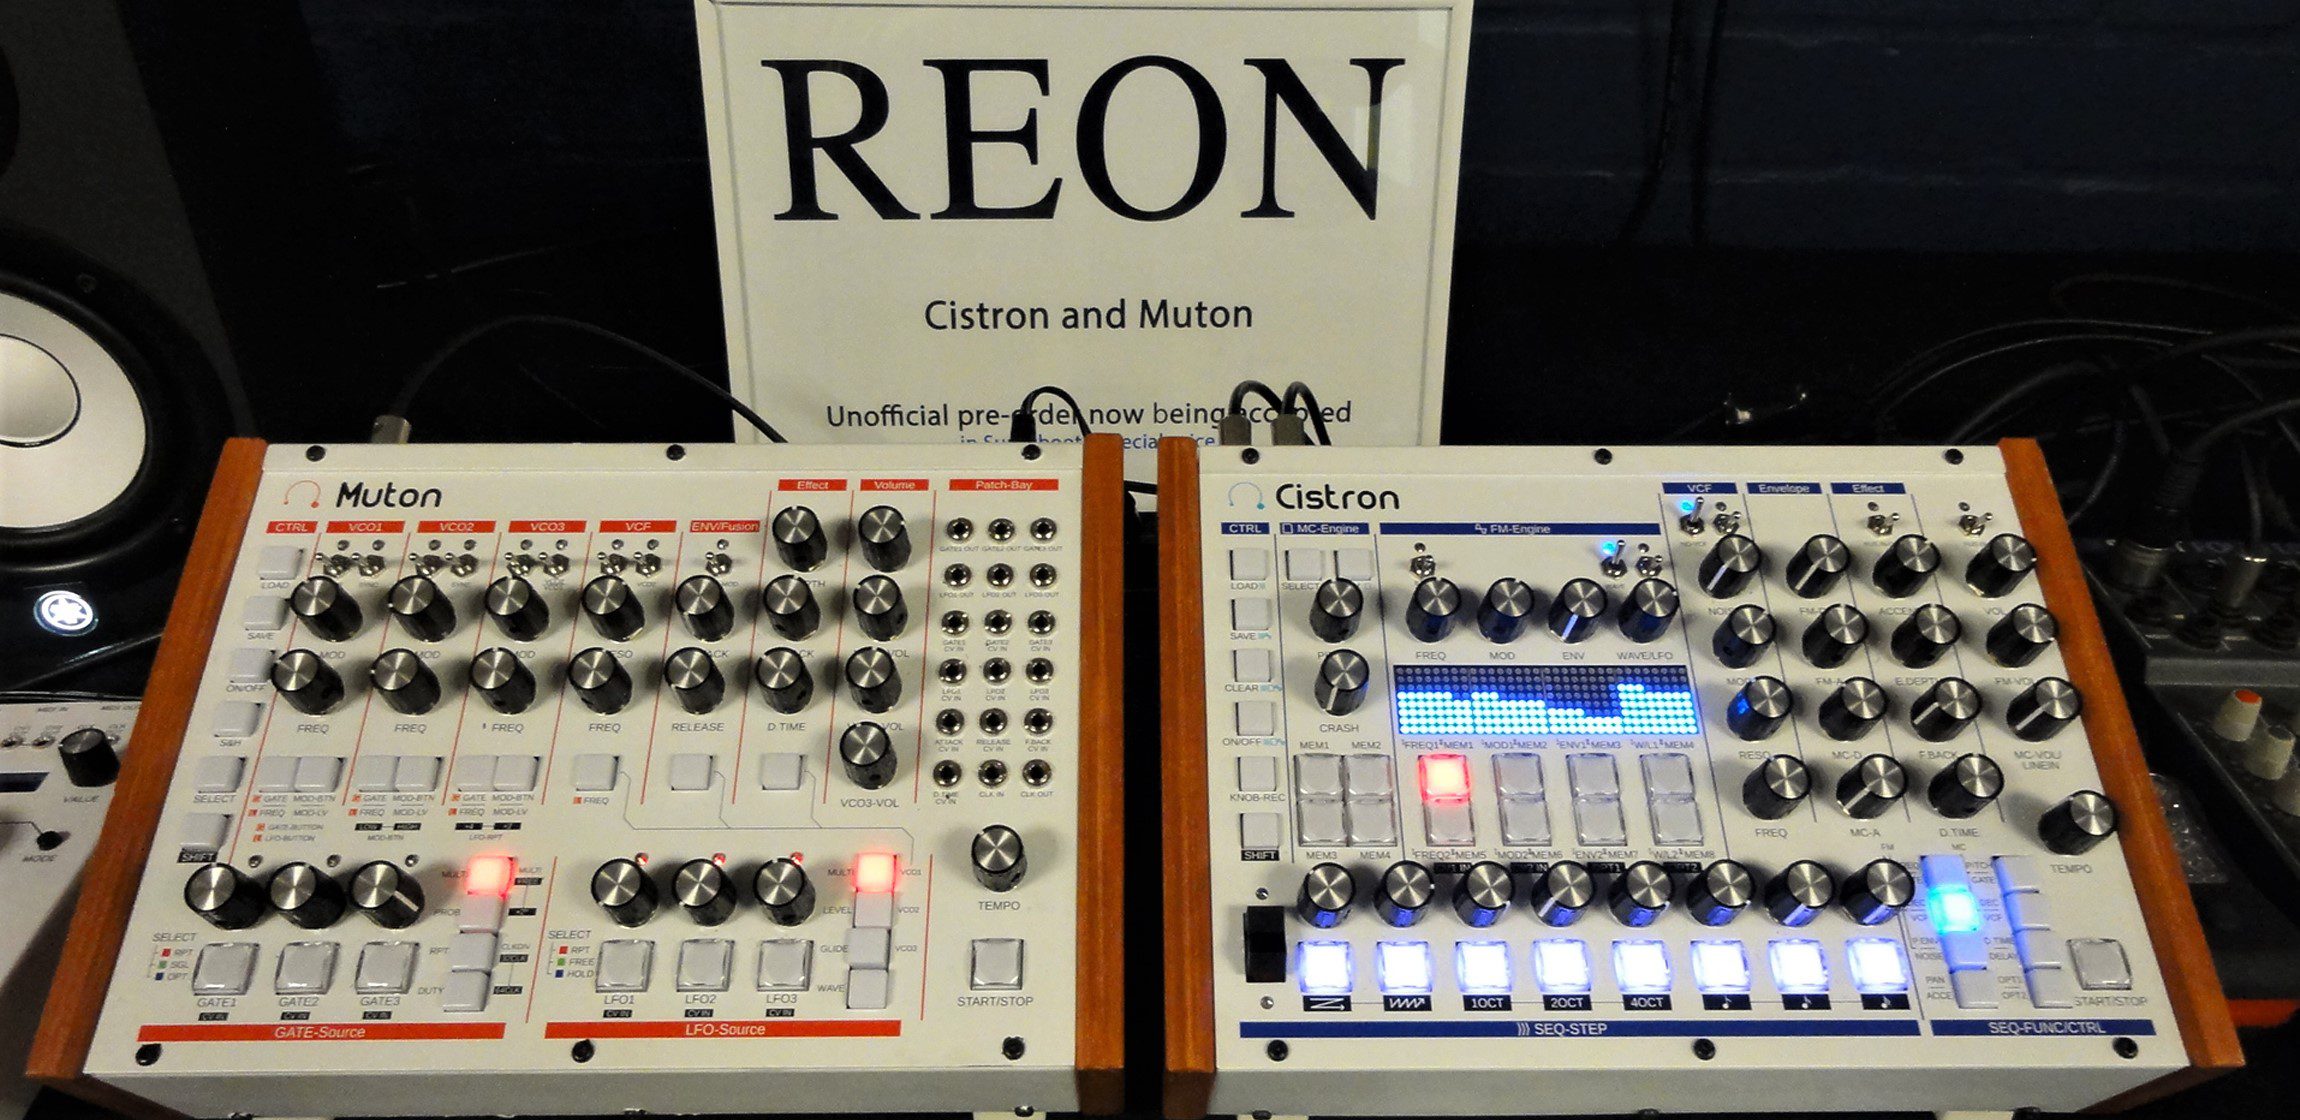 Superbooth 23: Reon Muton, semi-modular Synthesizer & Cistron, FM